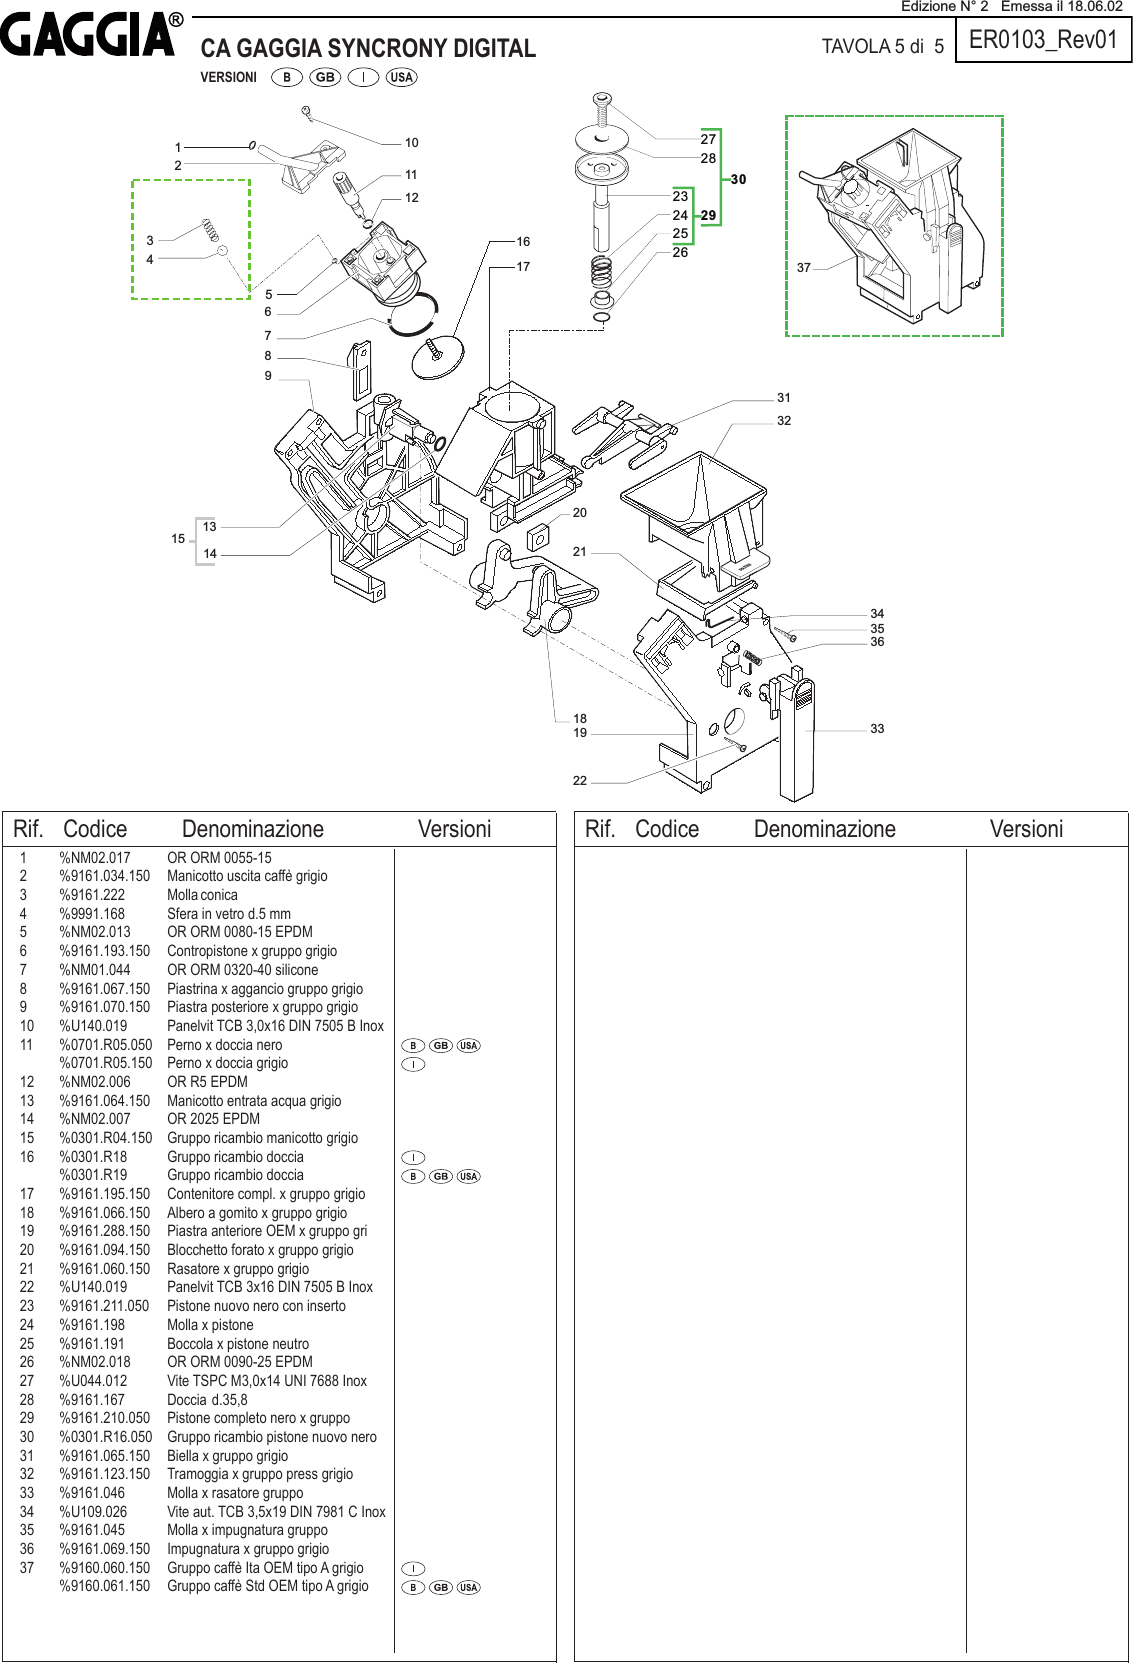 Page 5 of 5 - Gaggia Old Version Syncrony Digital Diagram E003.038 Ed.02 (Gaggia Digital) User Manual